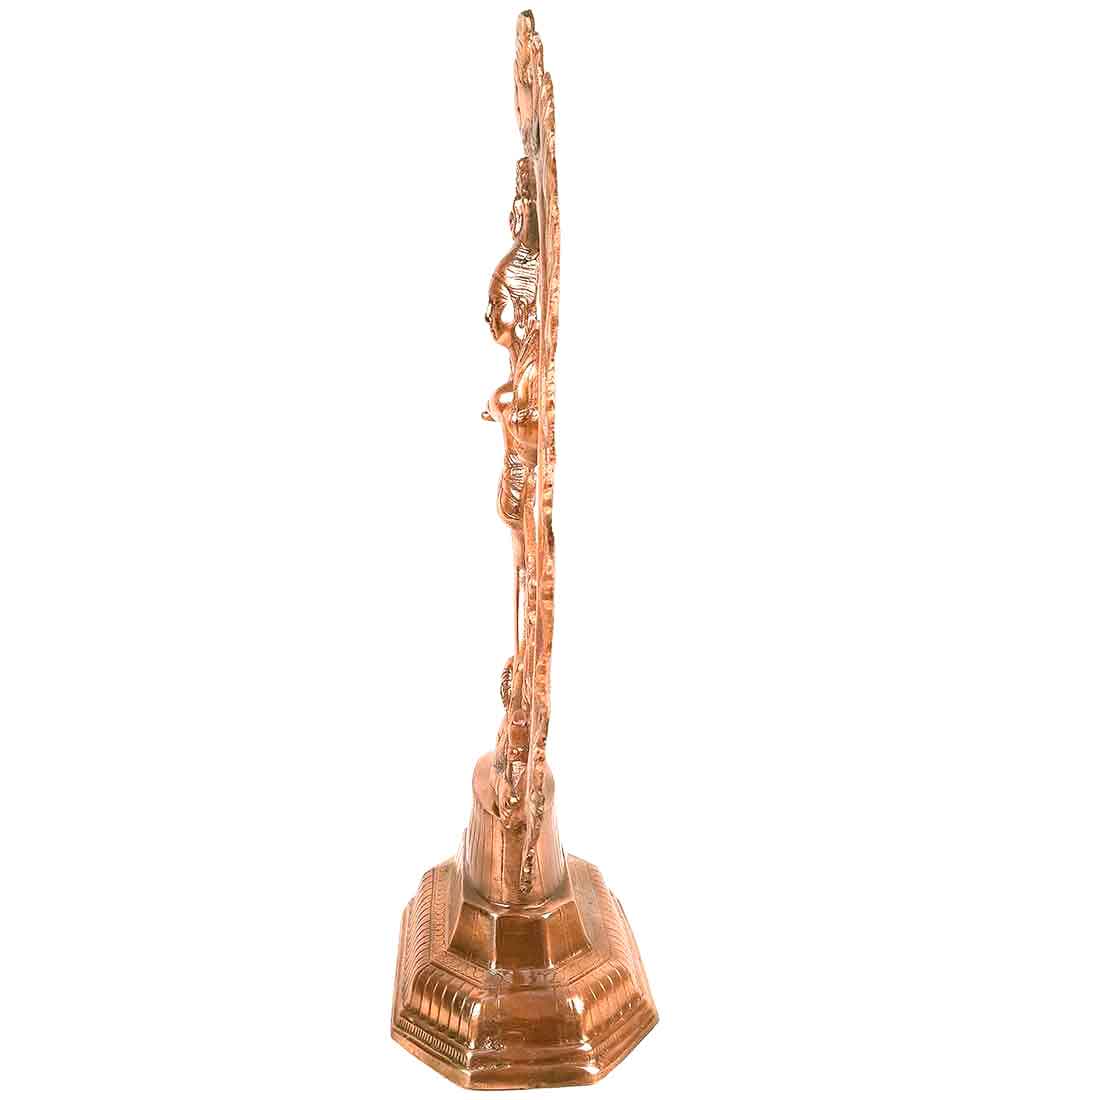 Natraj Statue - Nataraja Shiva Idol Murti - for Home, Puja, Living Room & Office | Antique Idol for Religious & Spiritual Decor - for Home, Puja, Living Room Decor & Gifts - 24 Inch